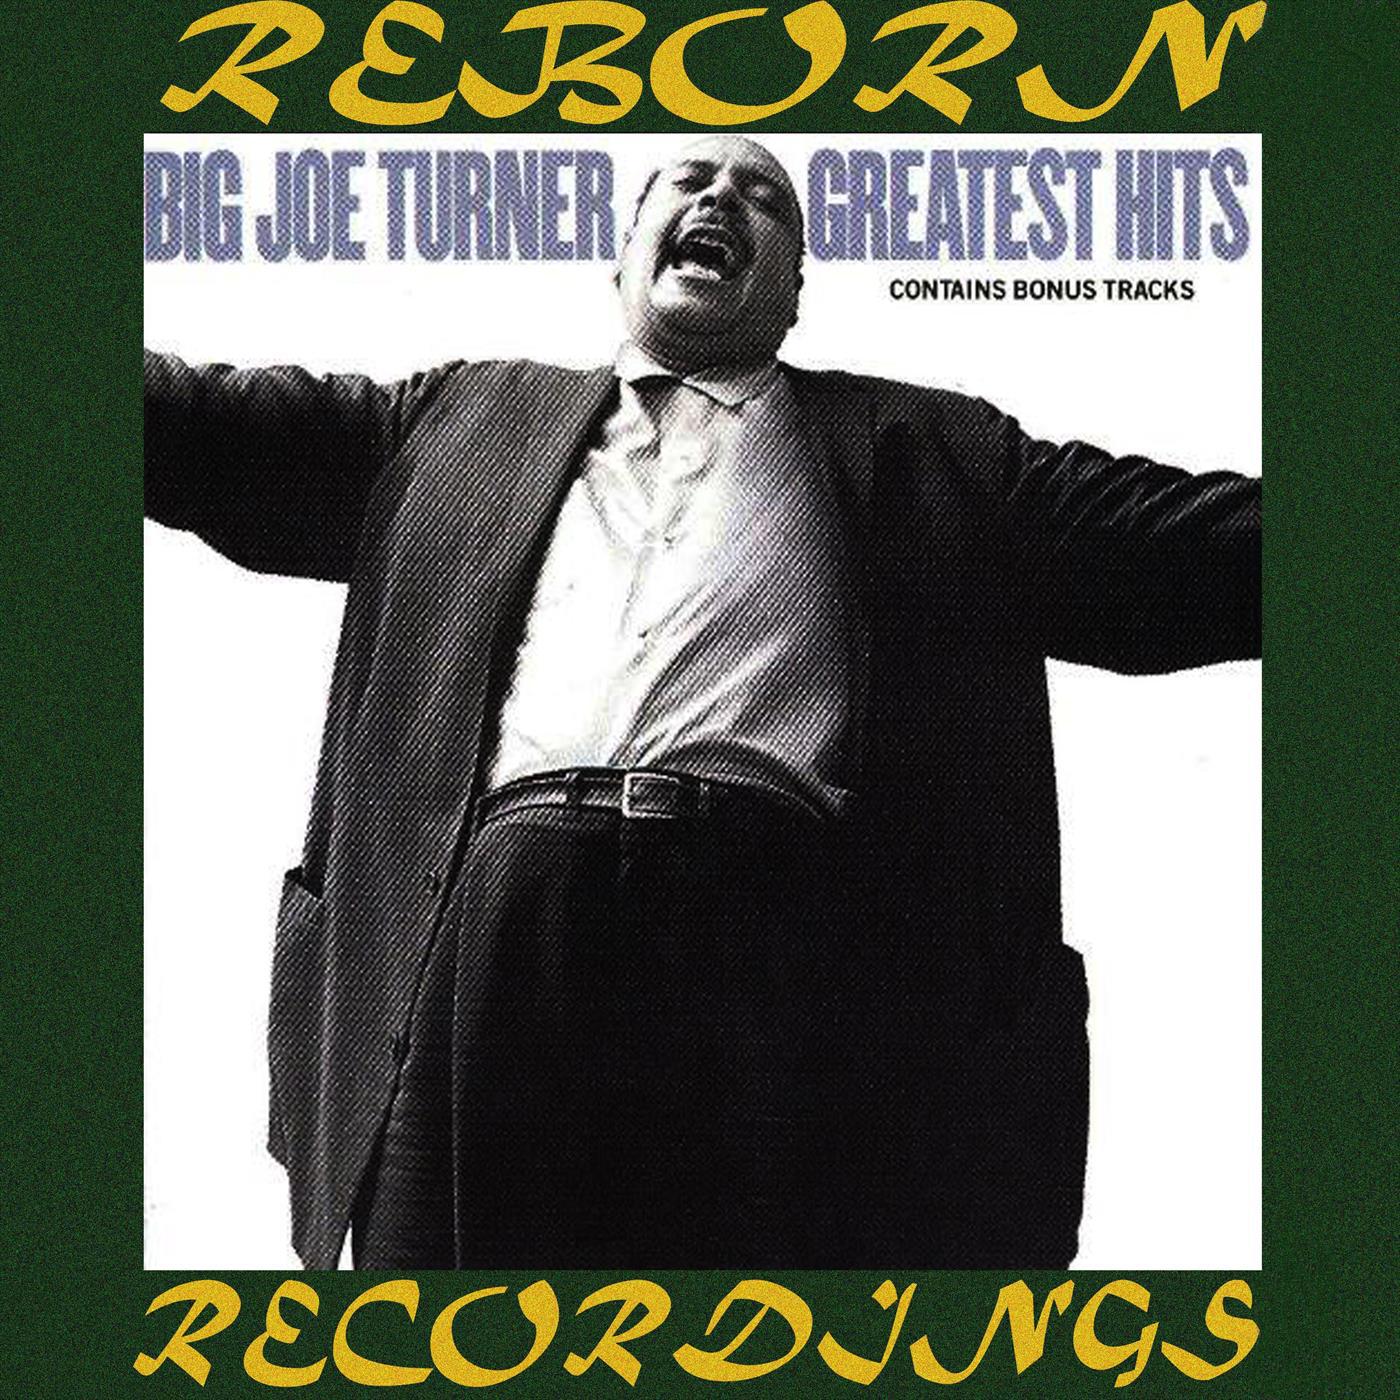 Big Joe Turner's Greatest Hits (HD Remastered)